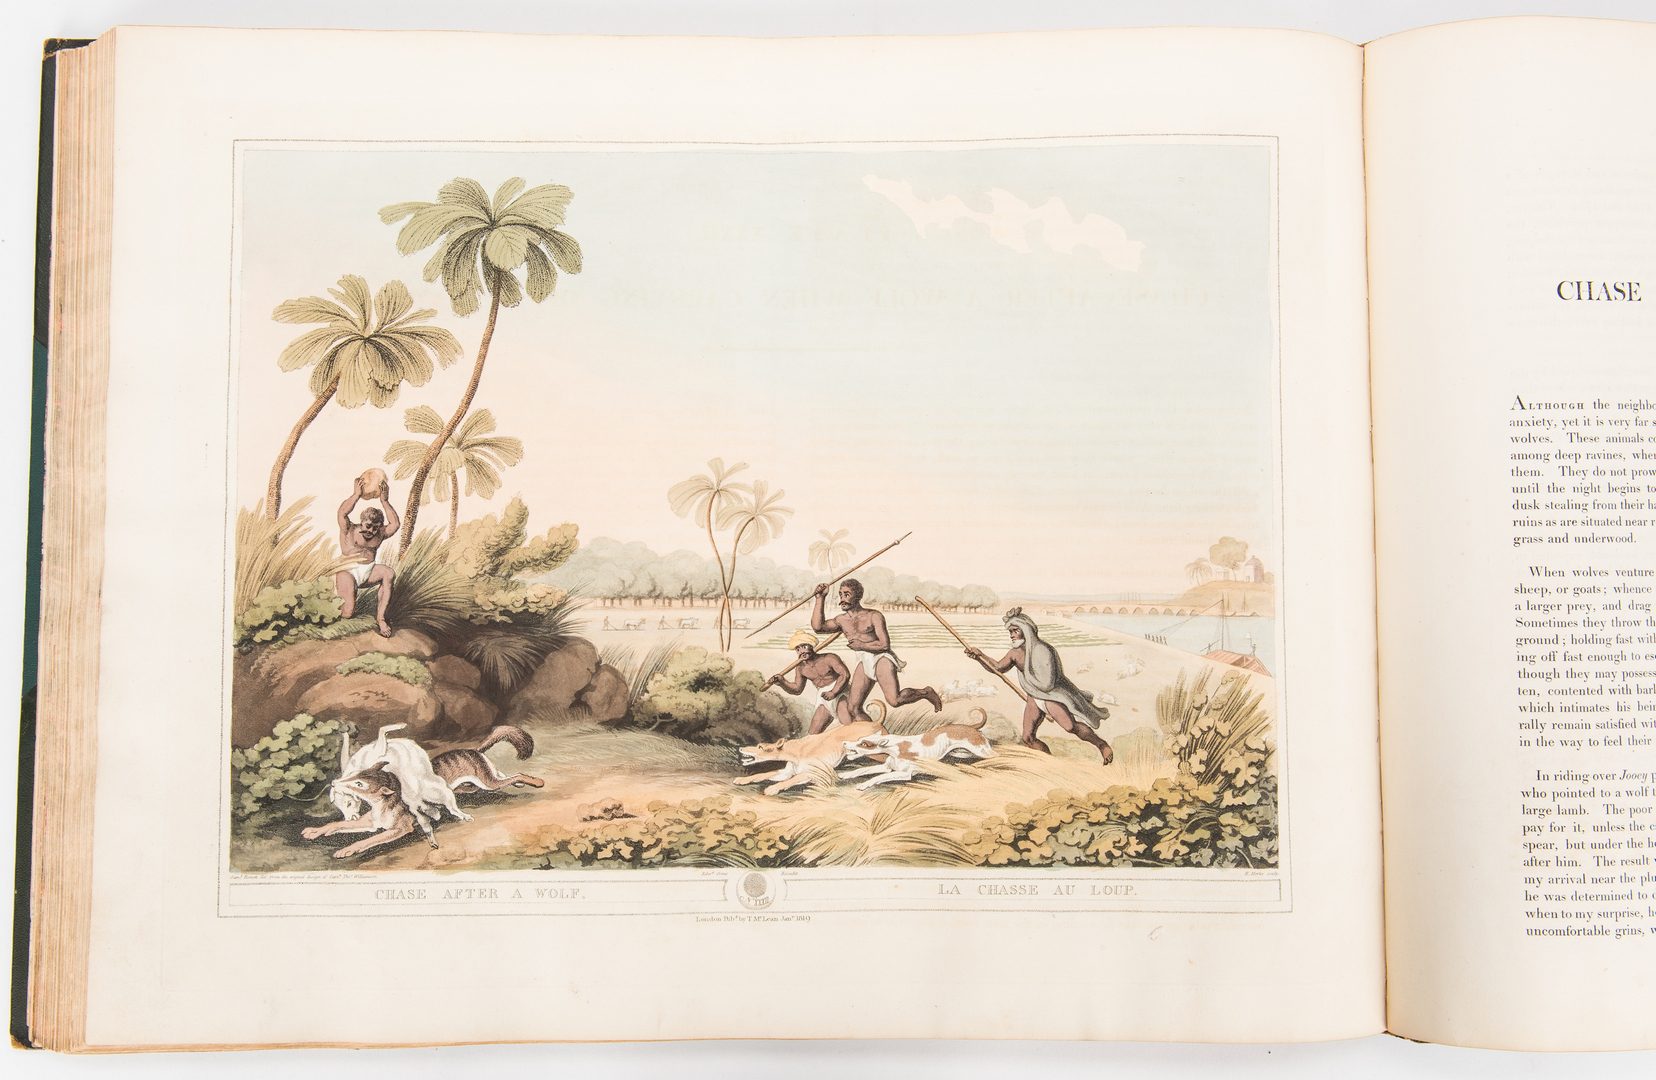 Lot 688: Oriental Field Sports of the East, T. Williamson, 1819